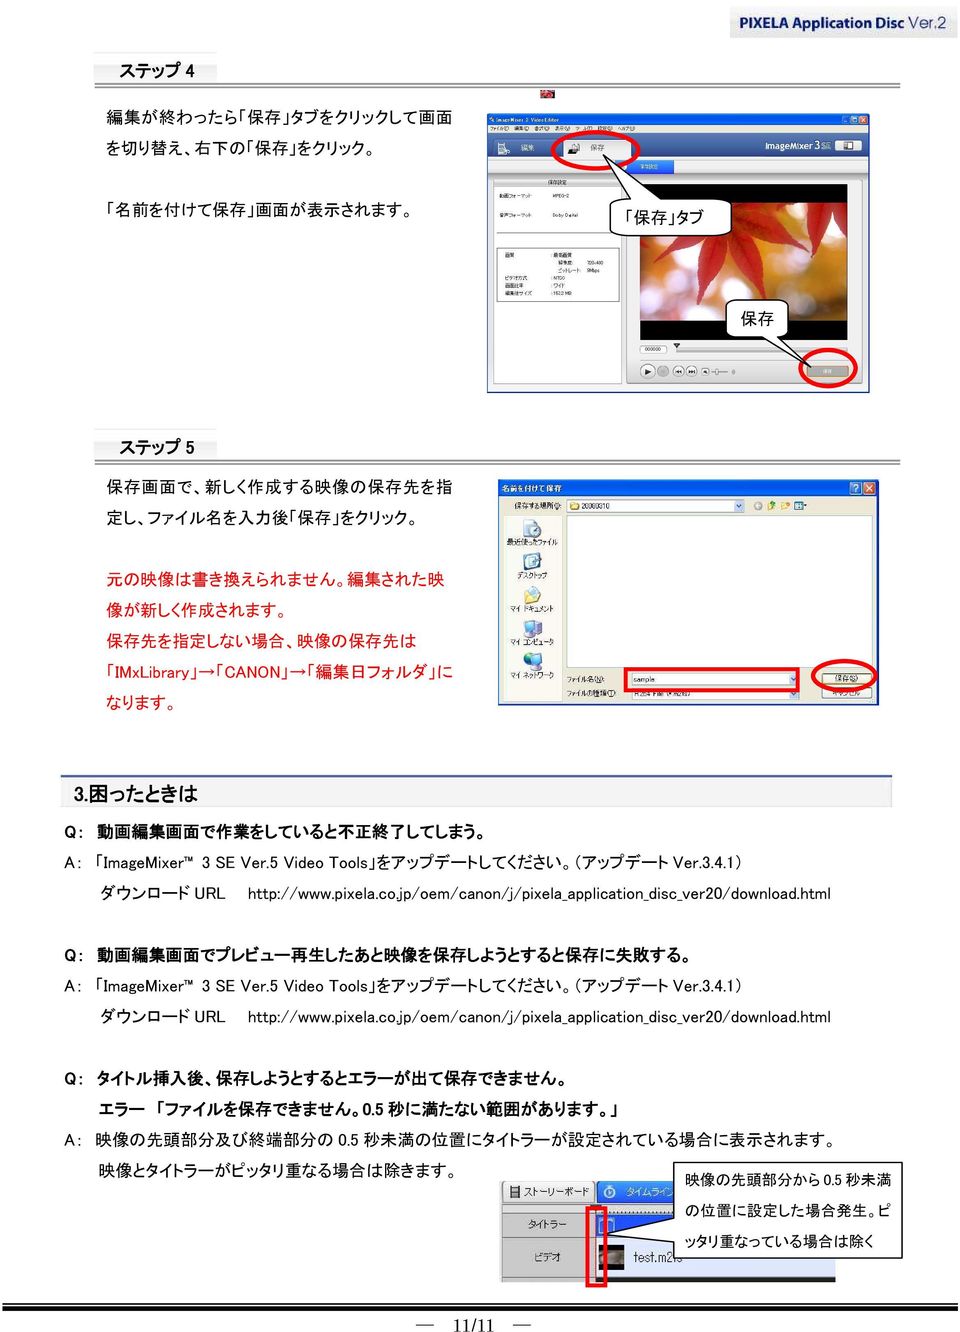 5 Video Tools をアップデートしてください (アップデート Ver.3.4.1) ダウンロード URL http://www.pixela.co.jp/oem/canon/j/pixela_application_disc_ver20/download.